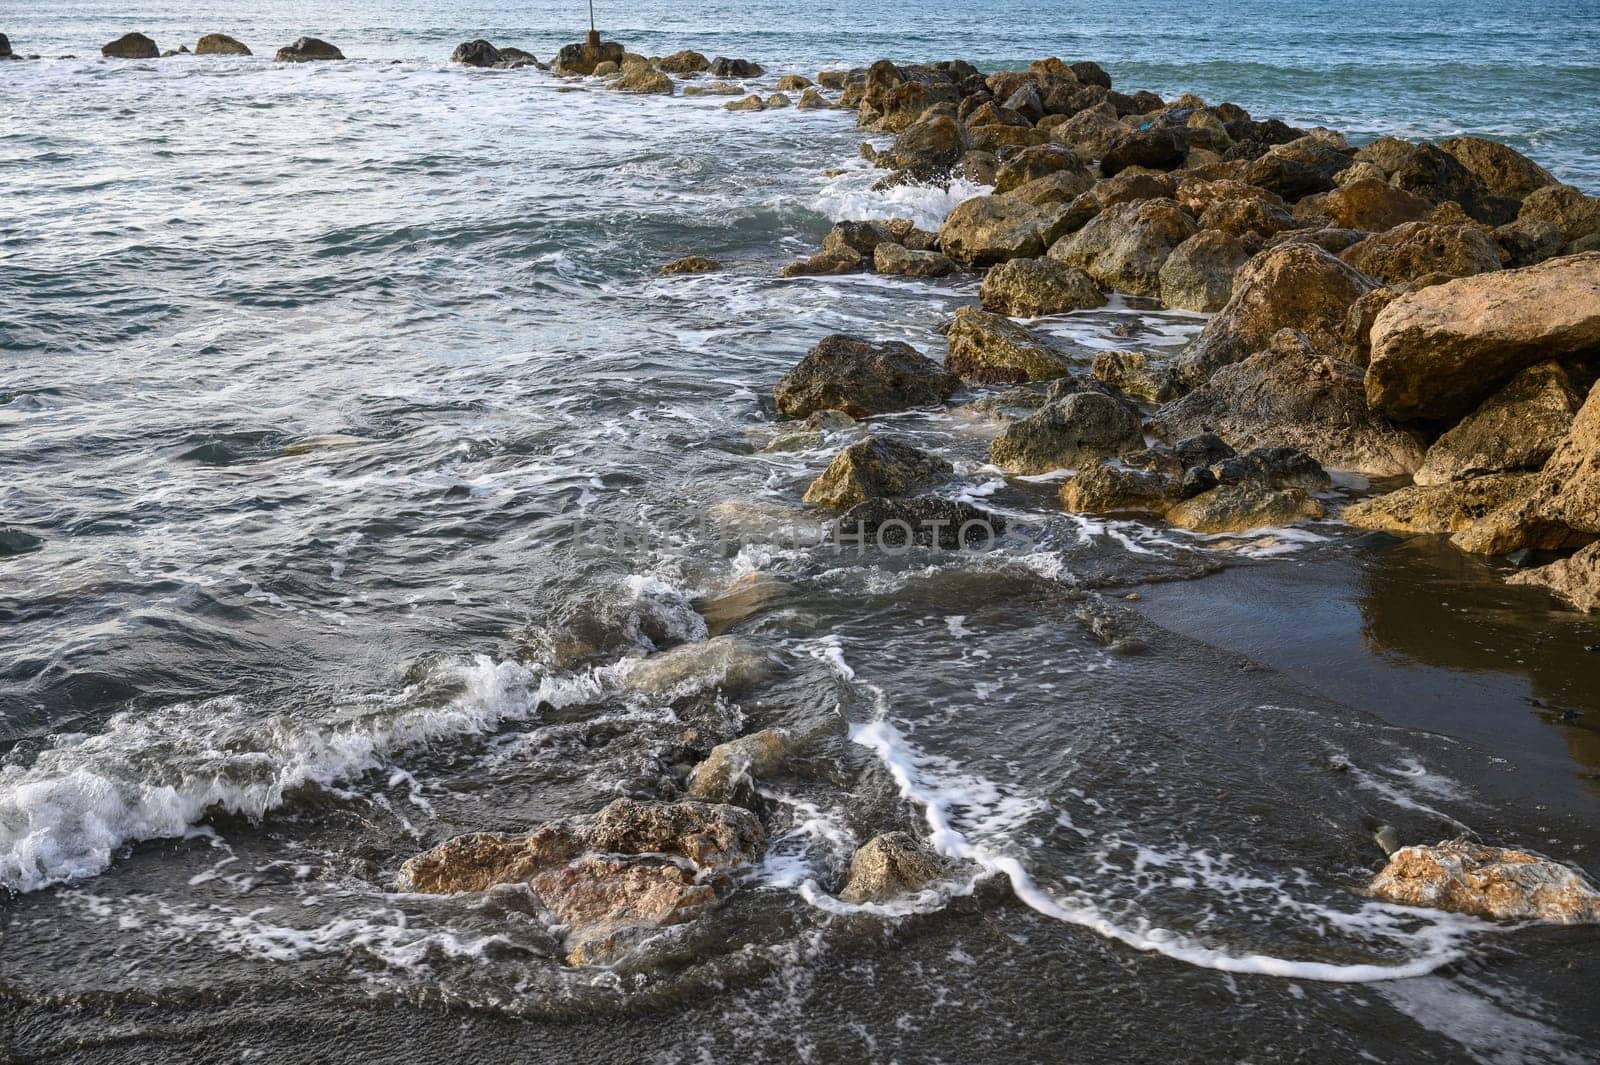 waves crashing on rocks on the Mediterranean coast 2 by Mixa74